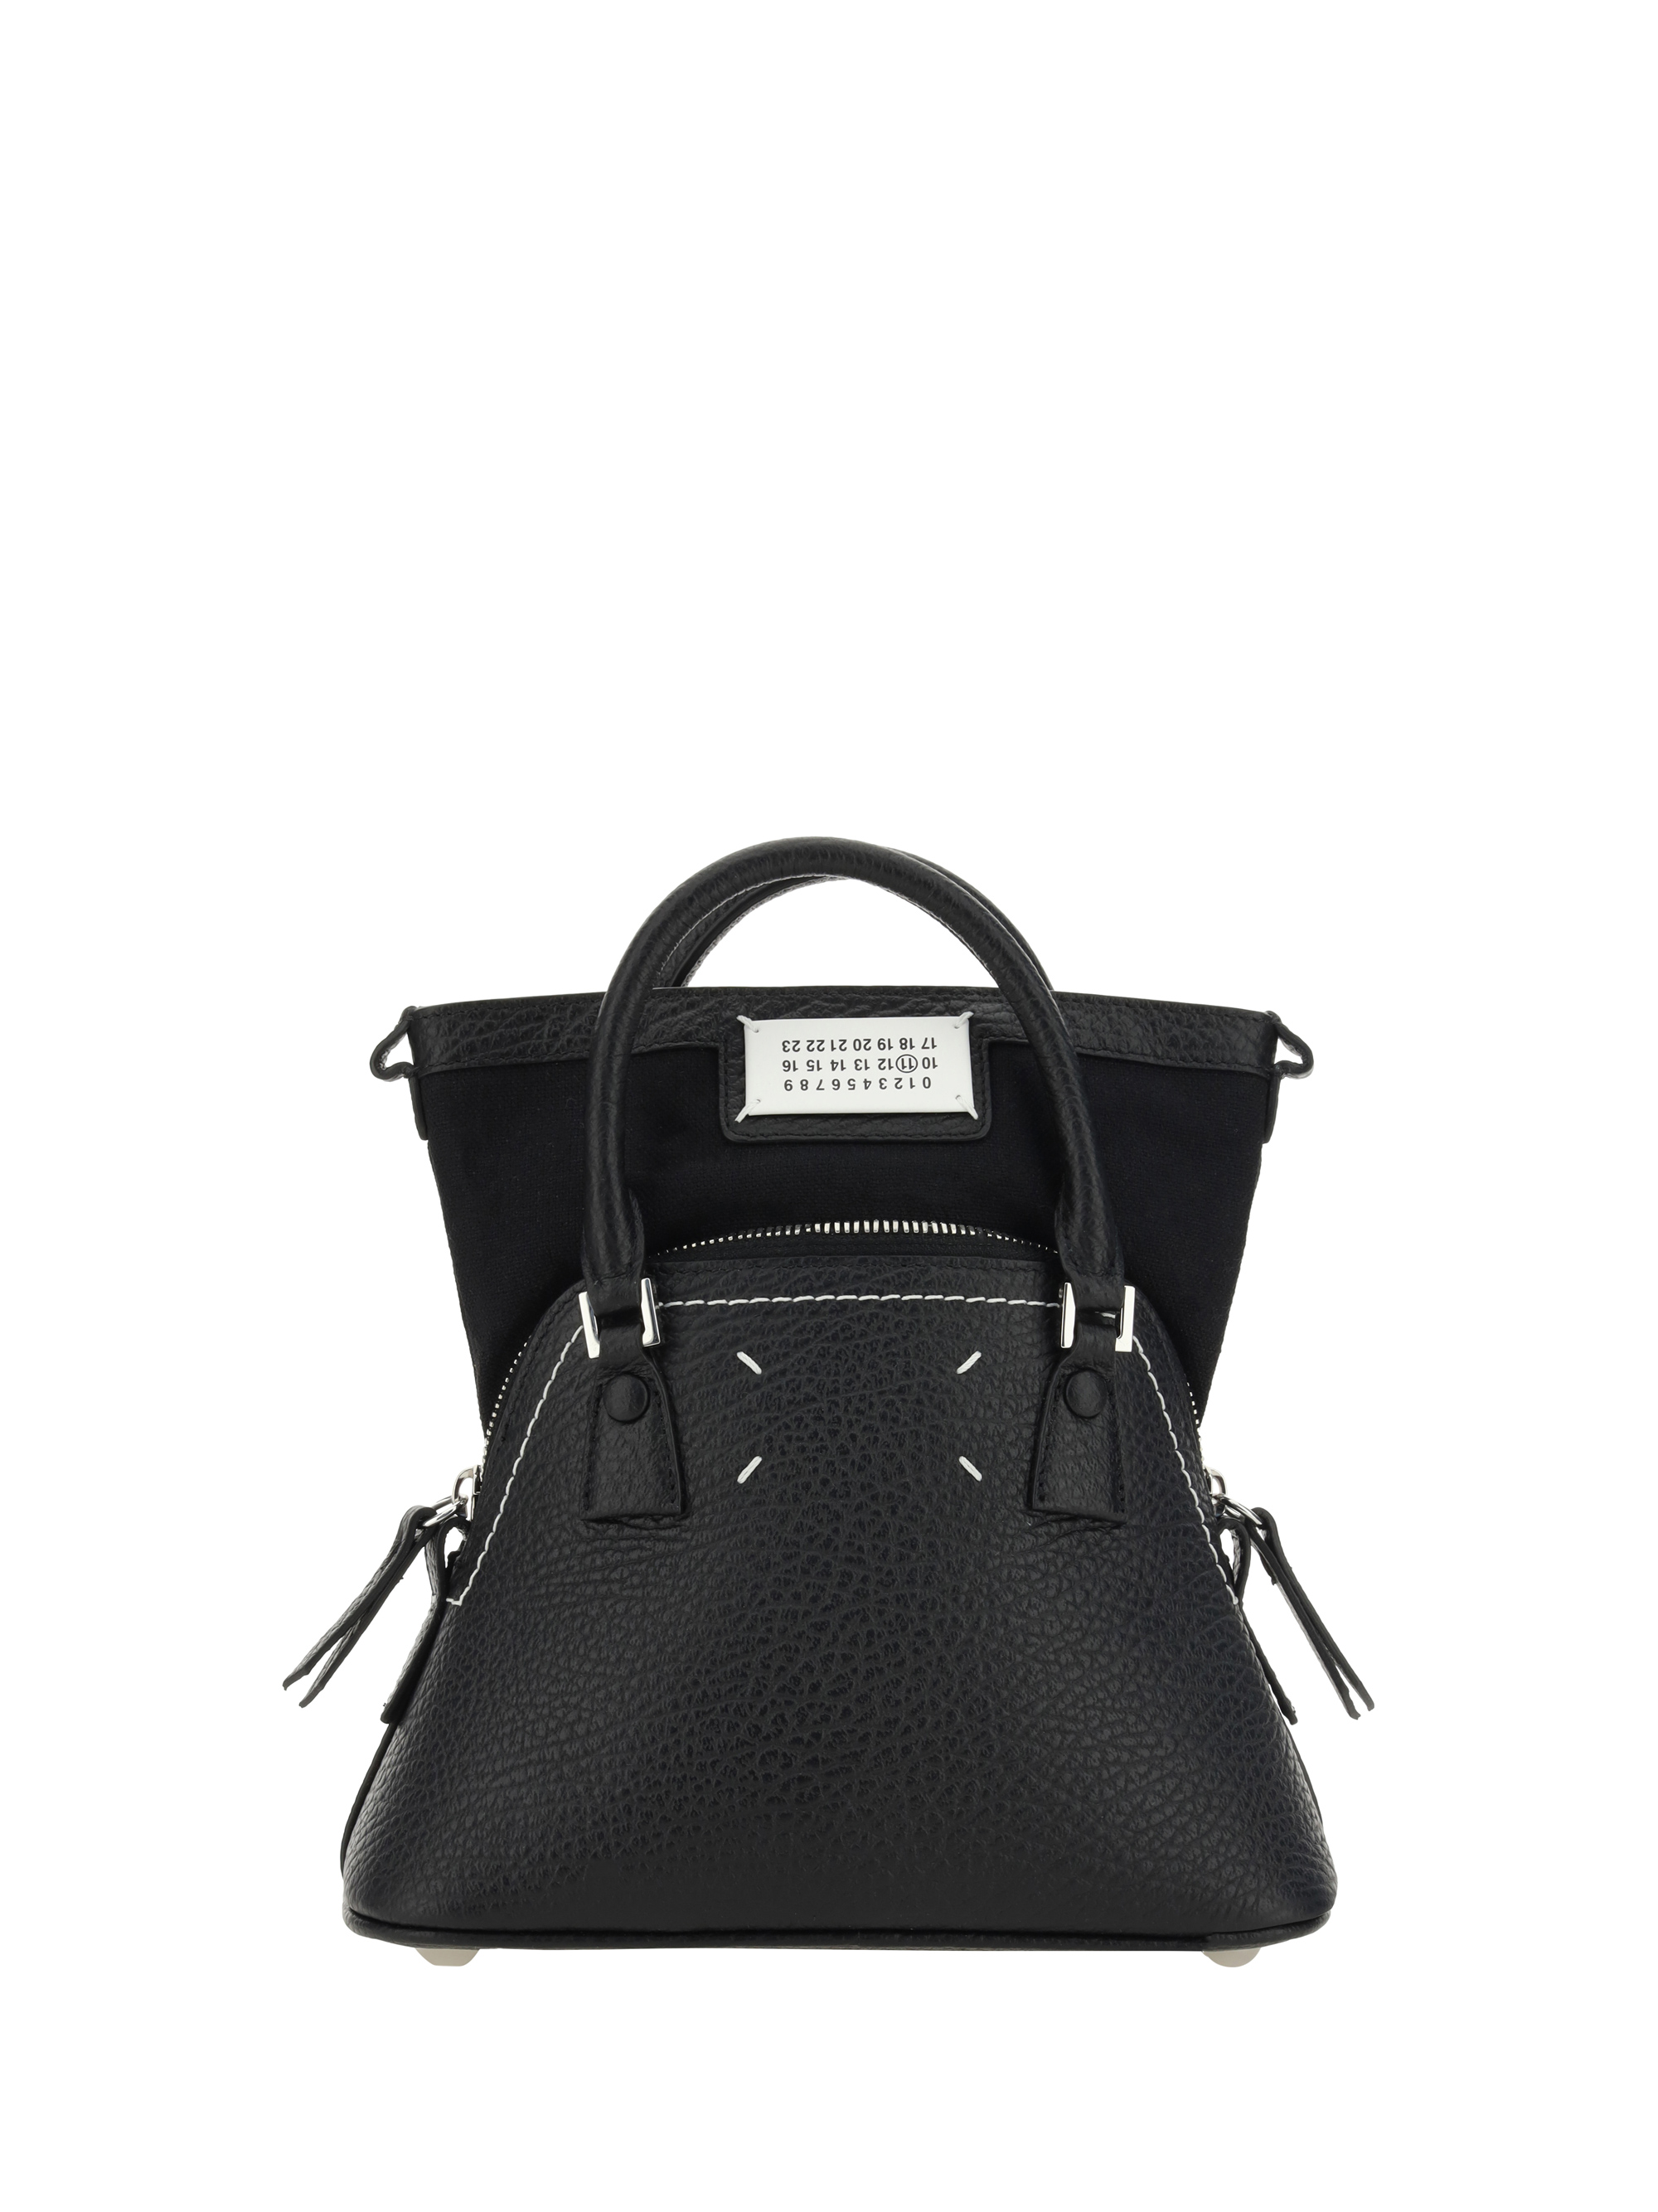 Margiela 5ac Handbag In Black